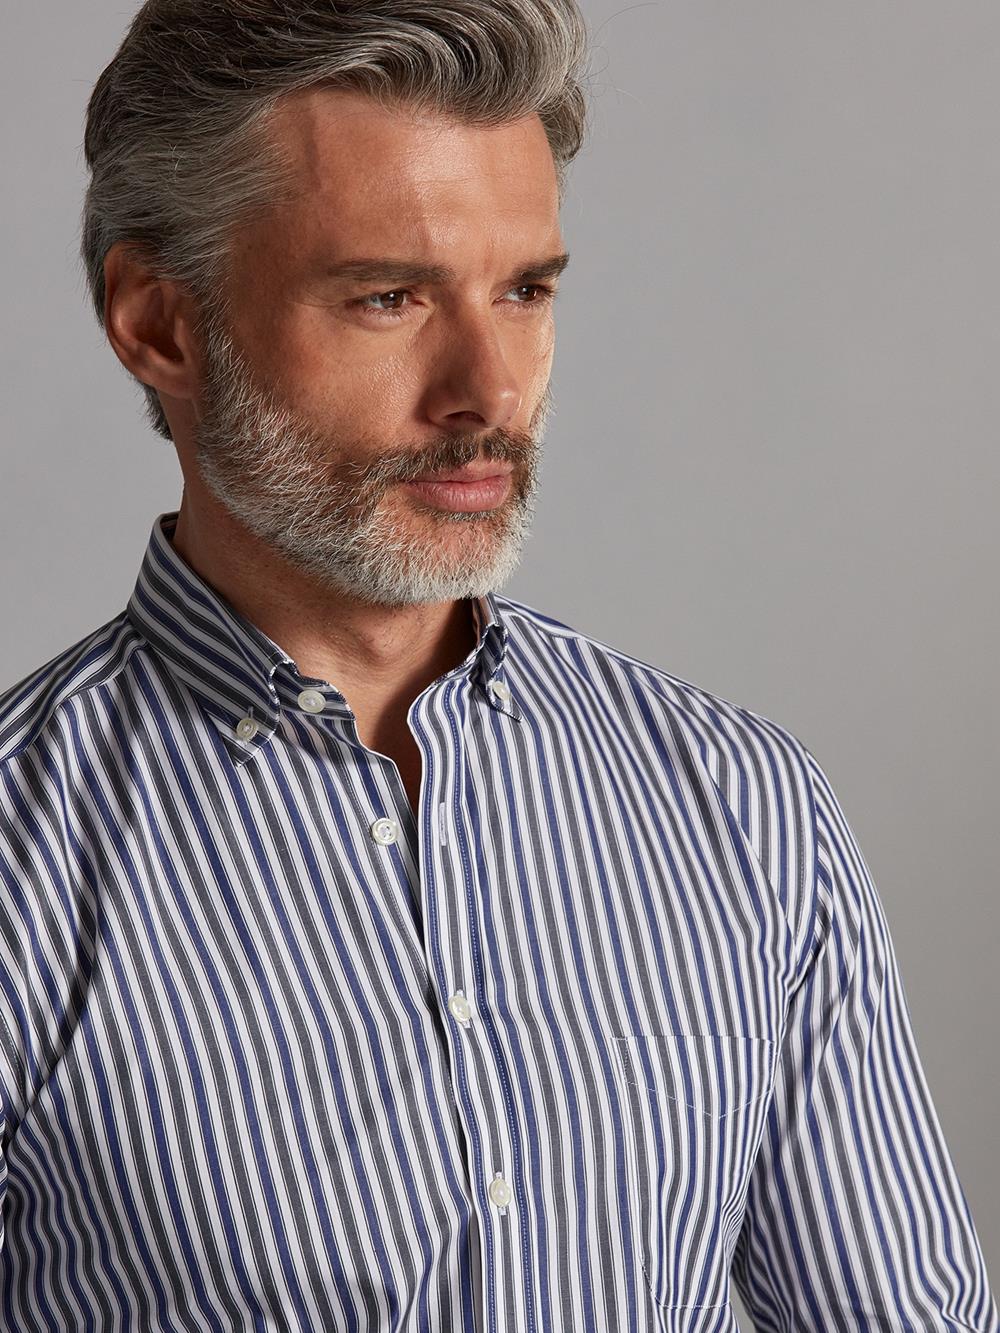 Robin navy and grey striped shirt - Button-down collar